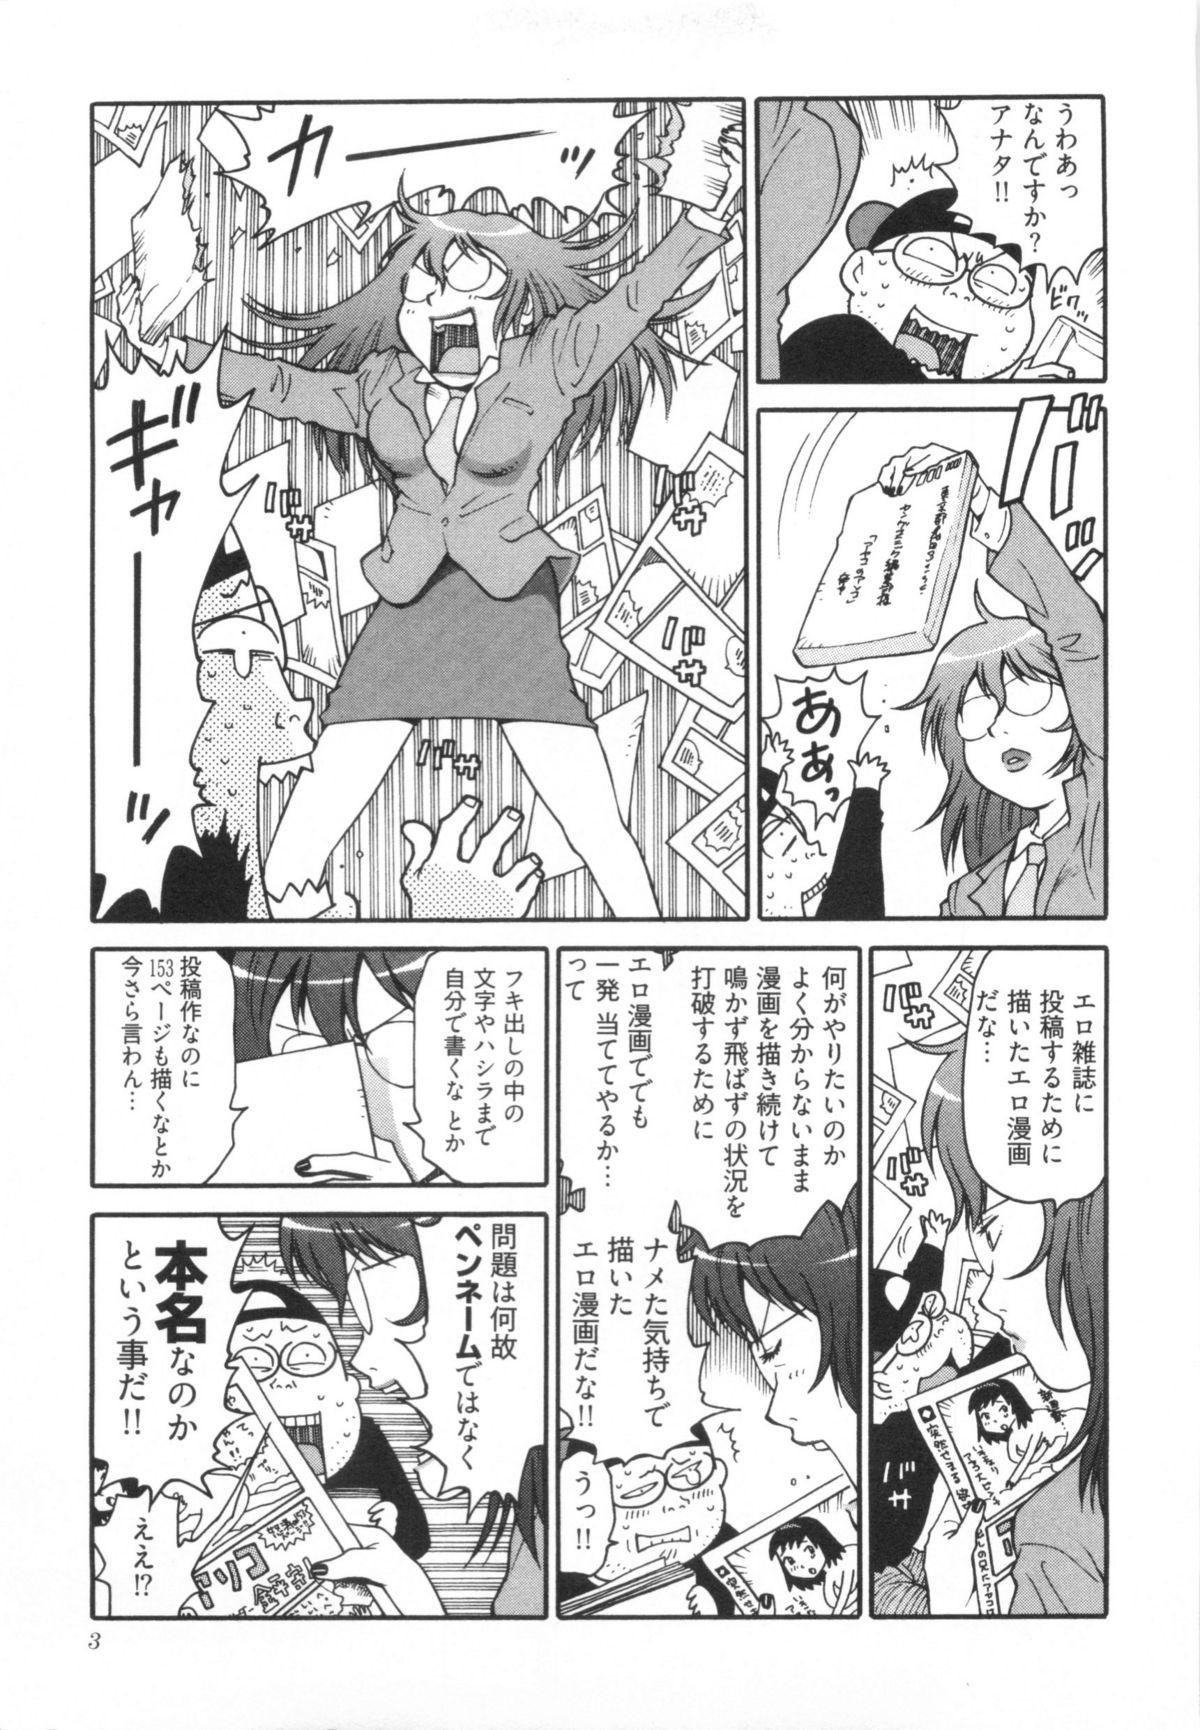 Outside 110107 エロ漫の星 01 上巻 素人からのエロ漫画入門 Female Domination - Page 10